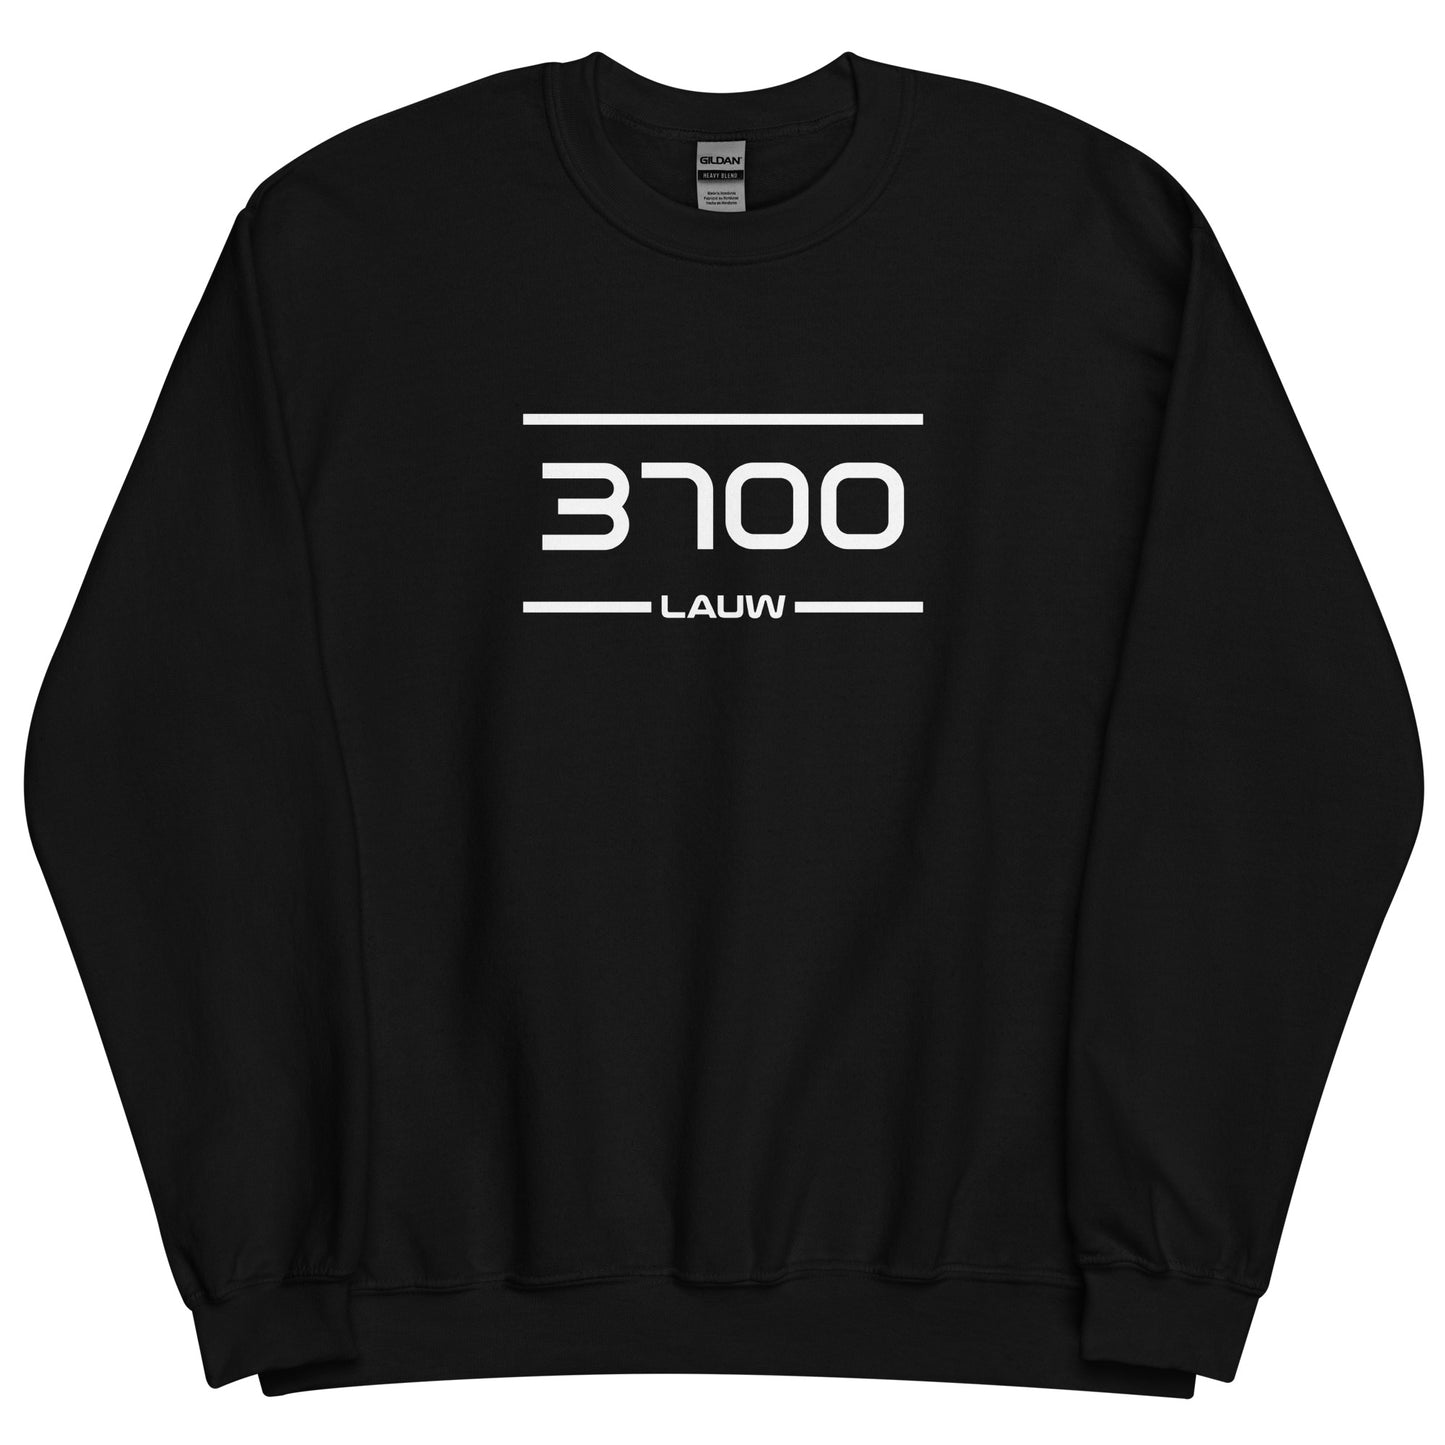 Sweater - 3700 - Lauw (M/V)